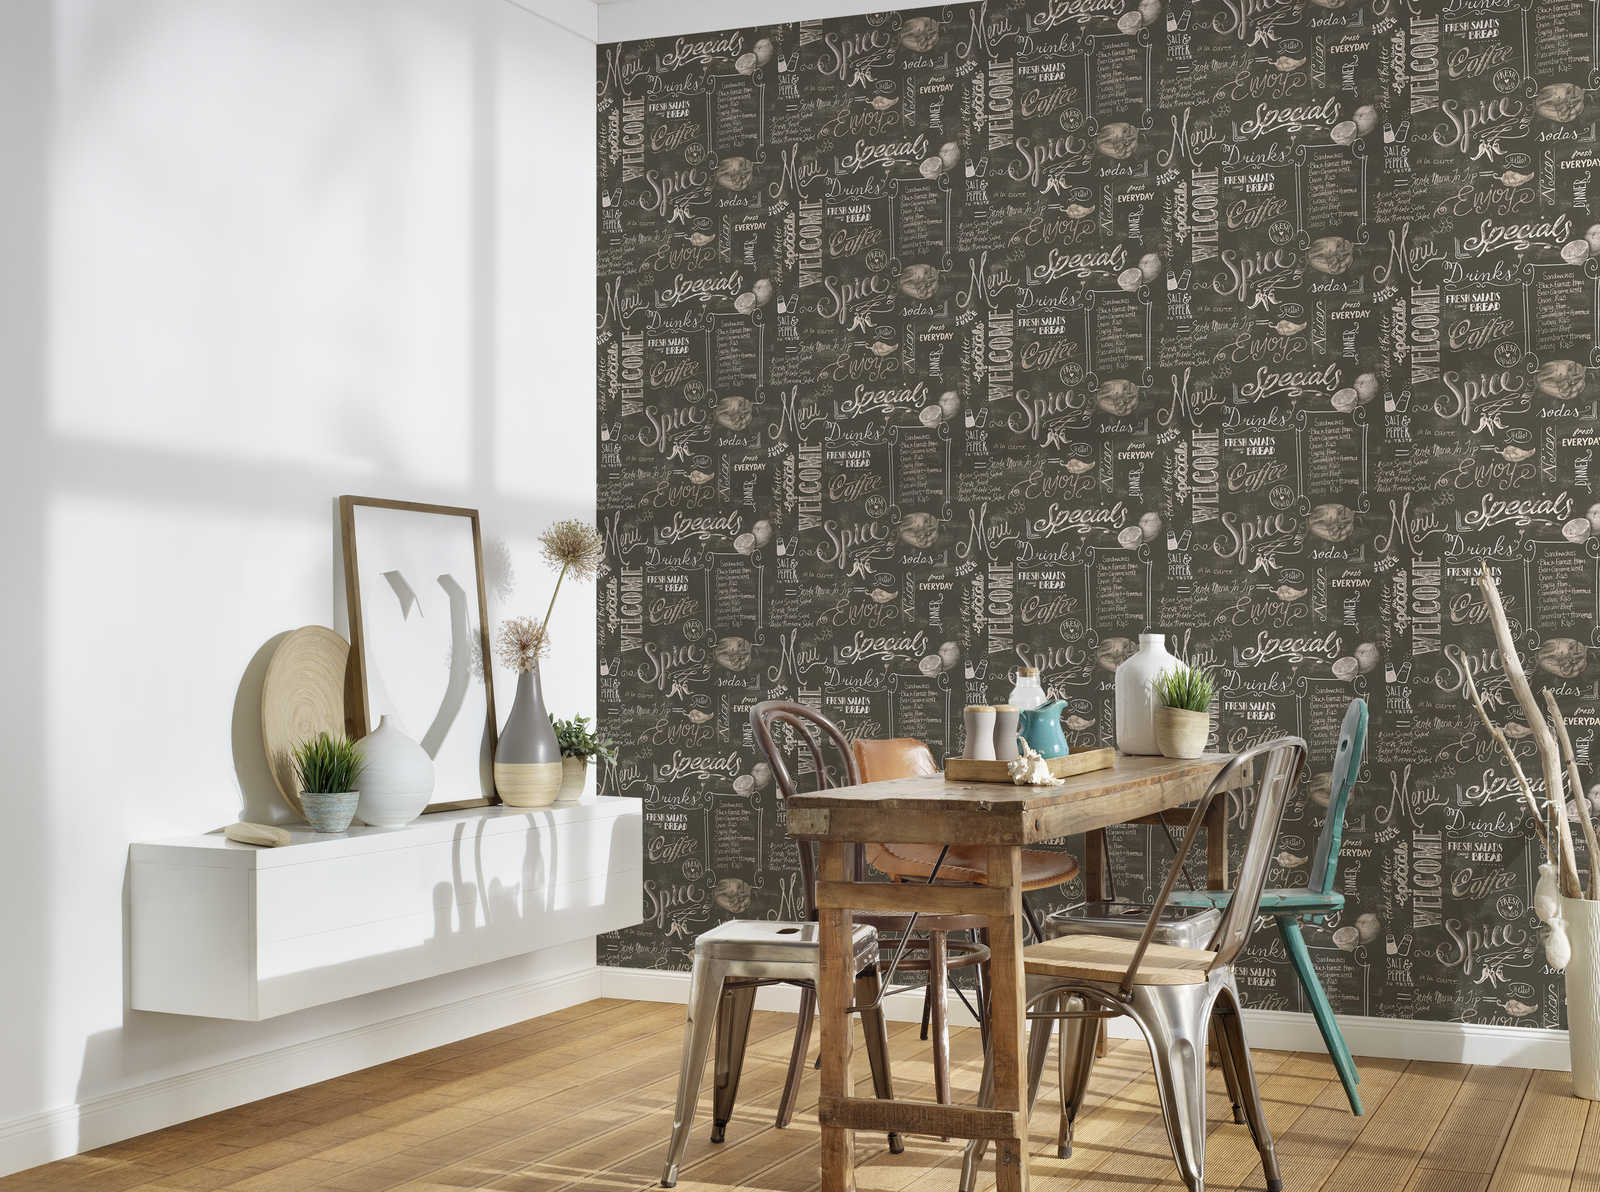             Self-adhesive wallpaper | menu board for the kitchen - black, grey, white
        